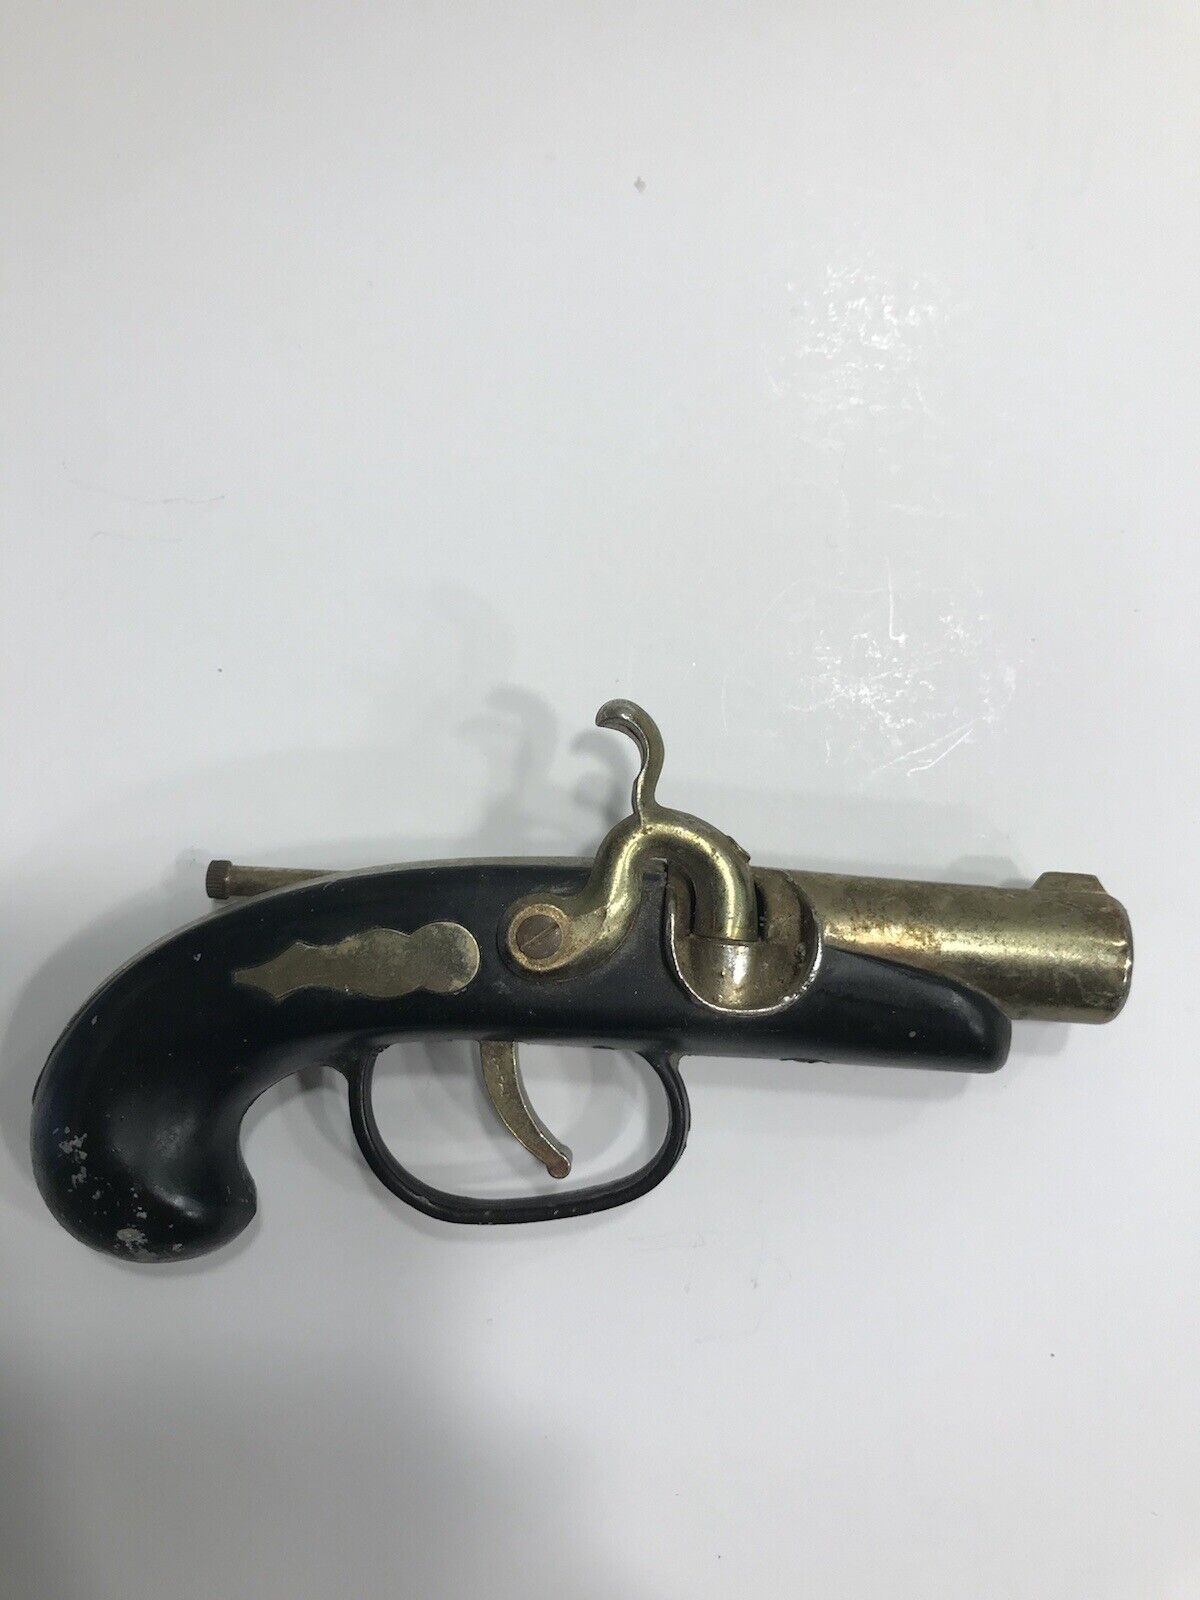 Vintage 6” Pirate Pistol Gun Flint Lock Cigarette Lighter Made In Japan Used